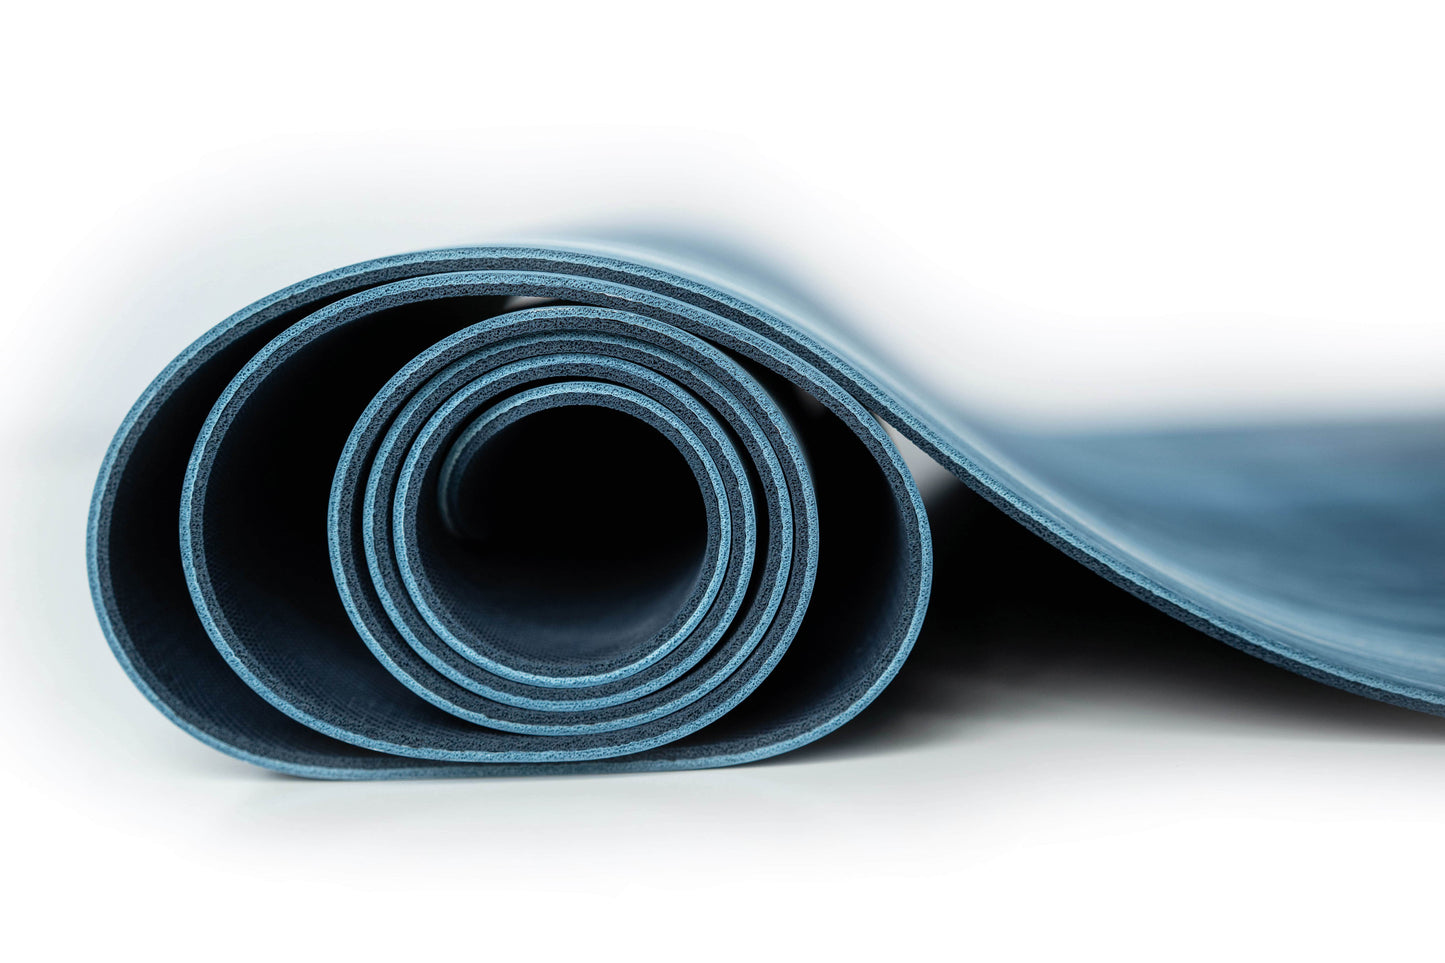 Reflection Yoga Mat by Mount Adams® (72" x 24" x 4mm)